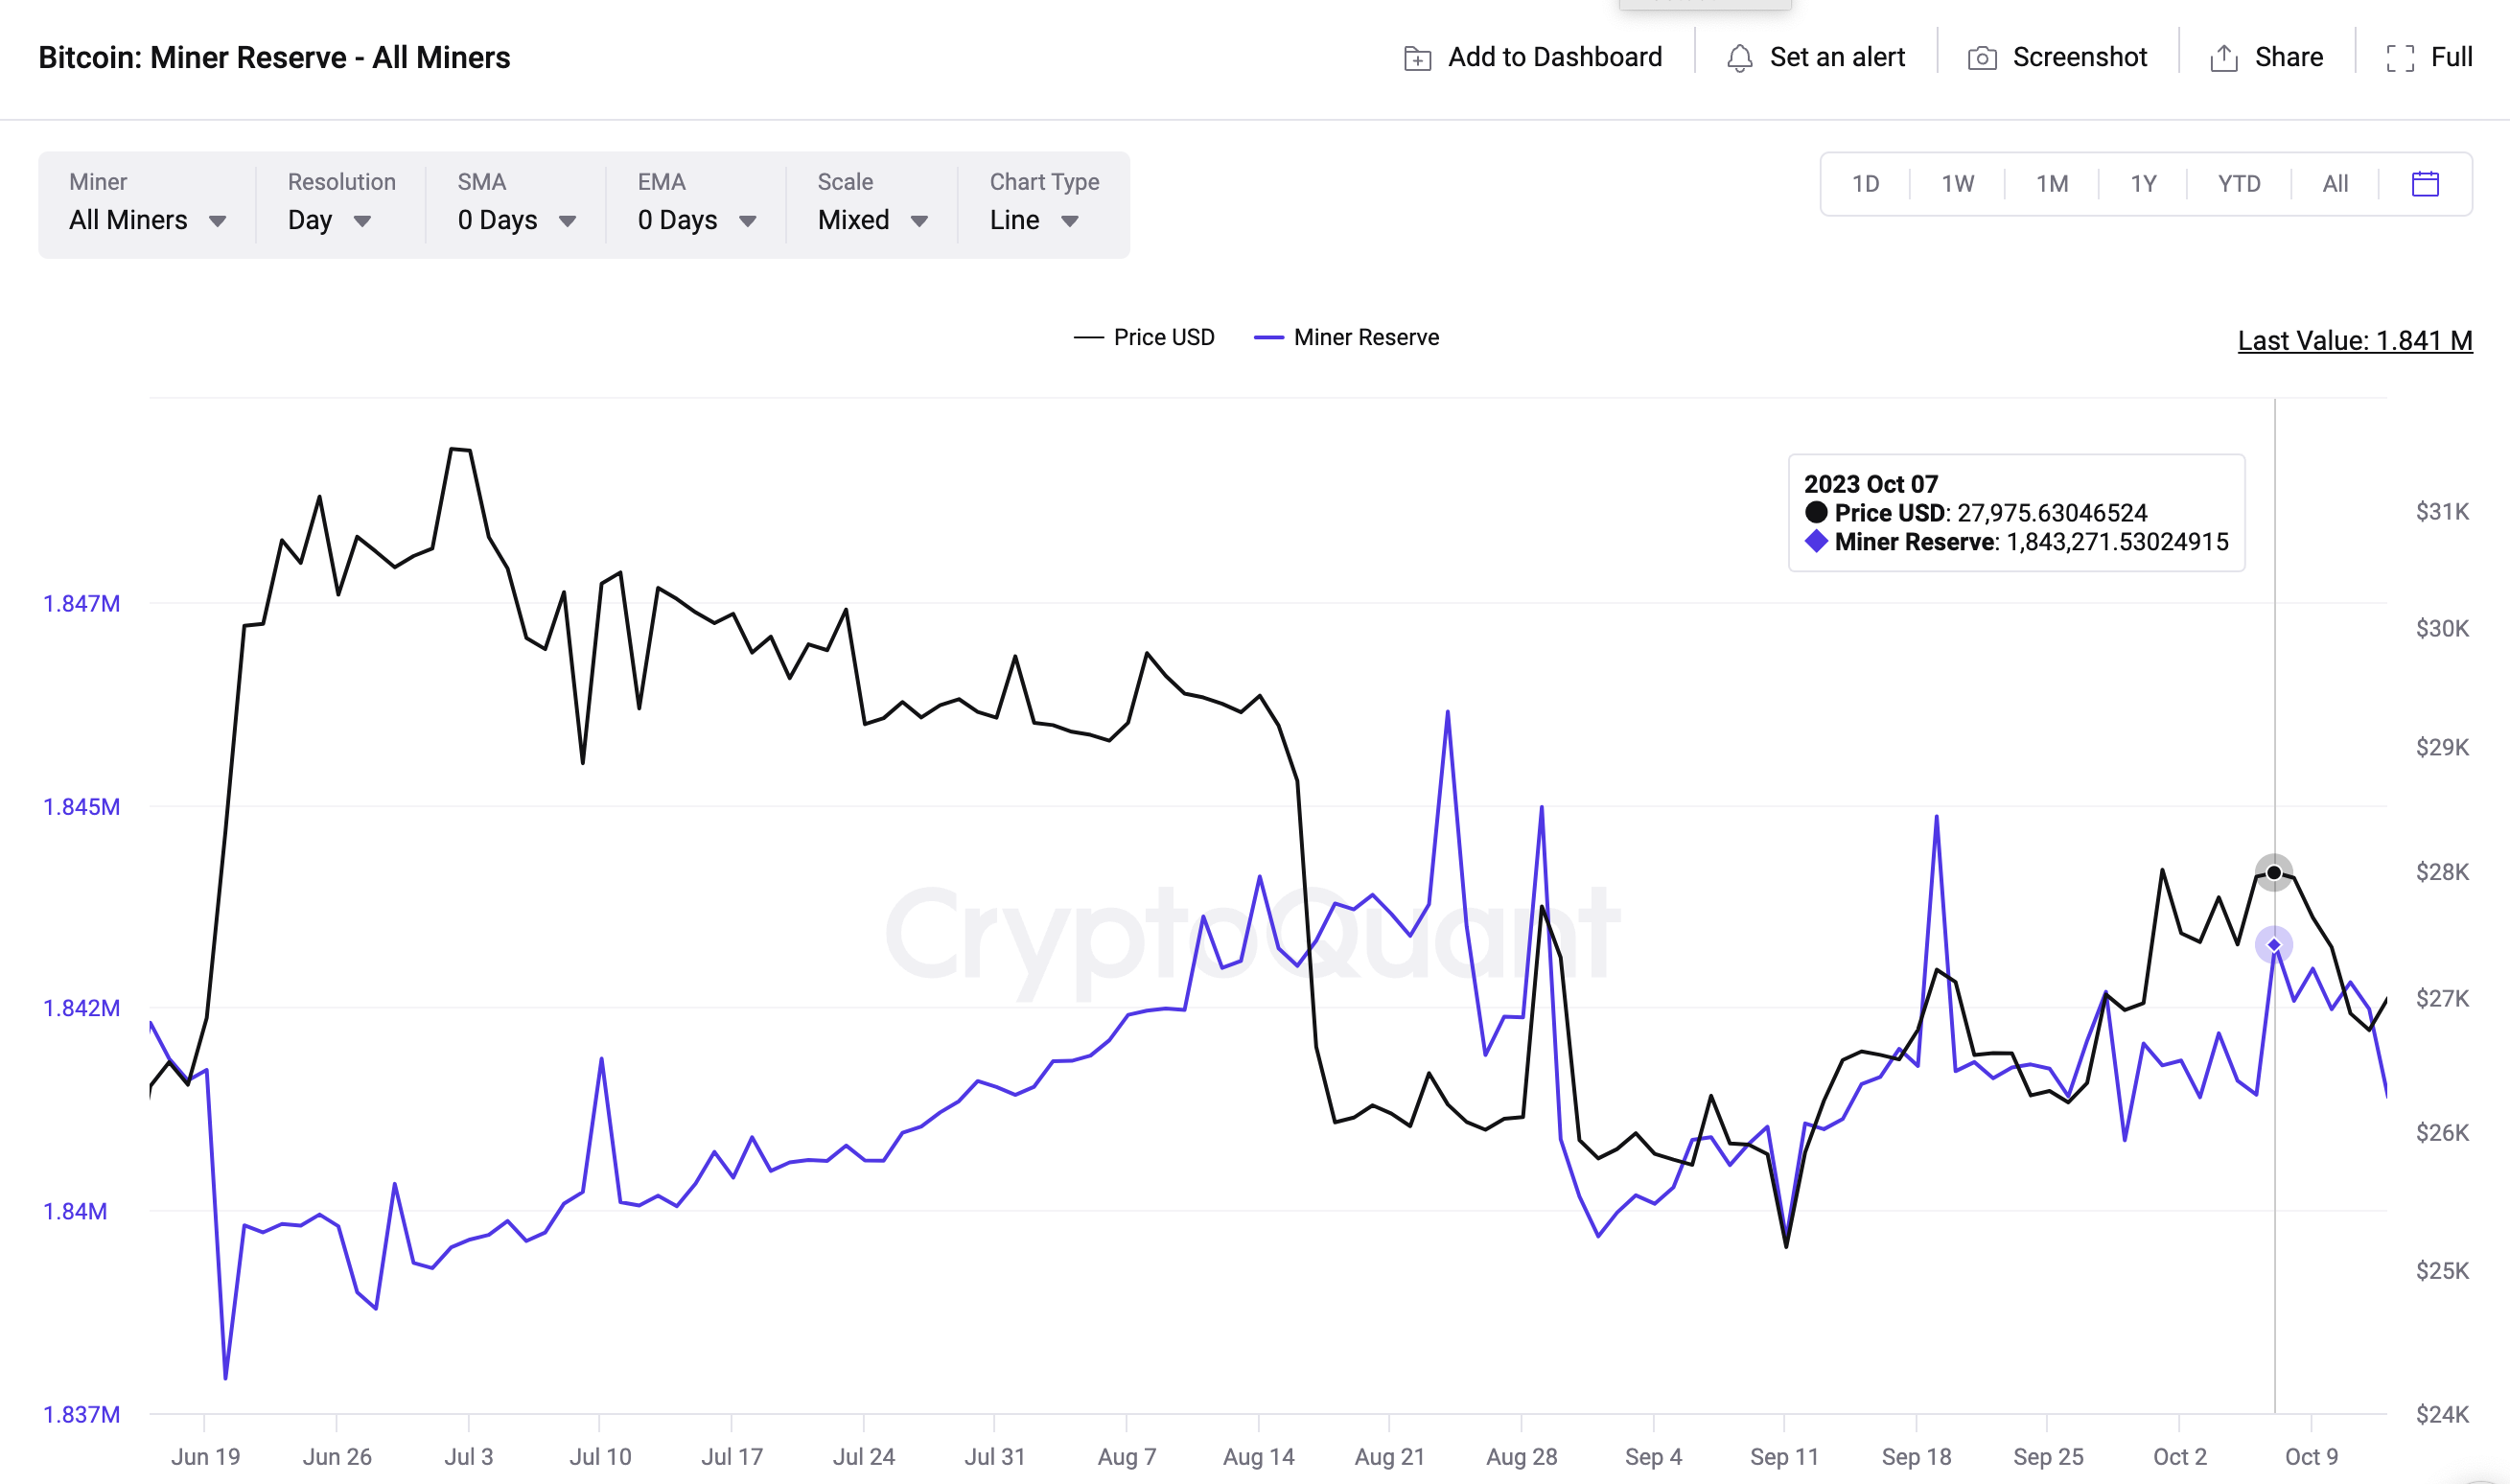 Bitcoin (BTC) Miners Reserves vs. Price 